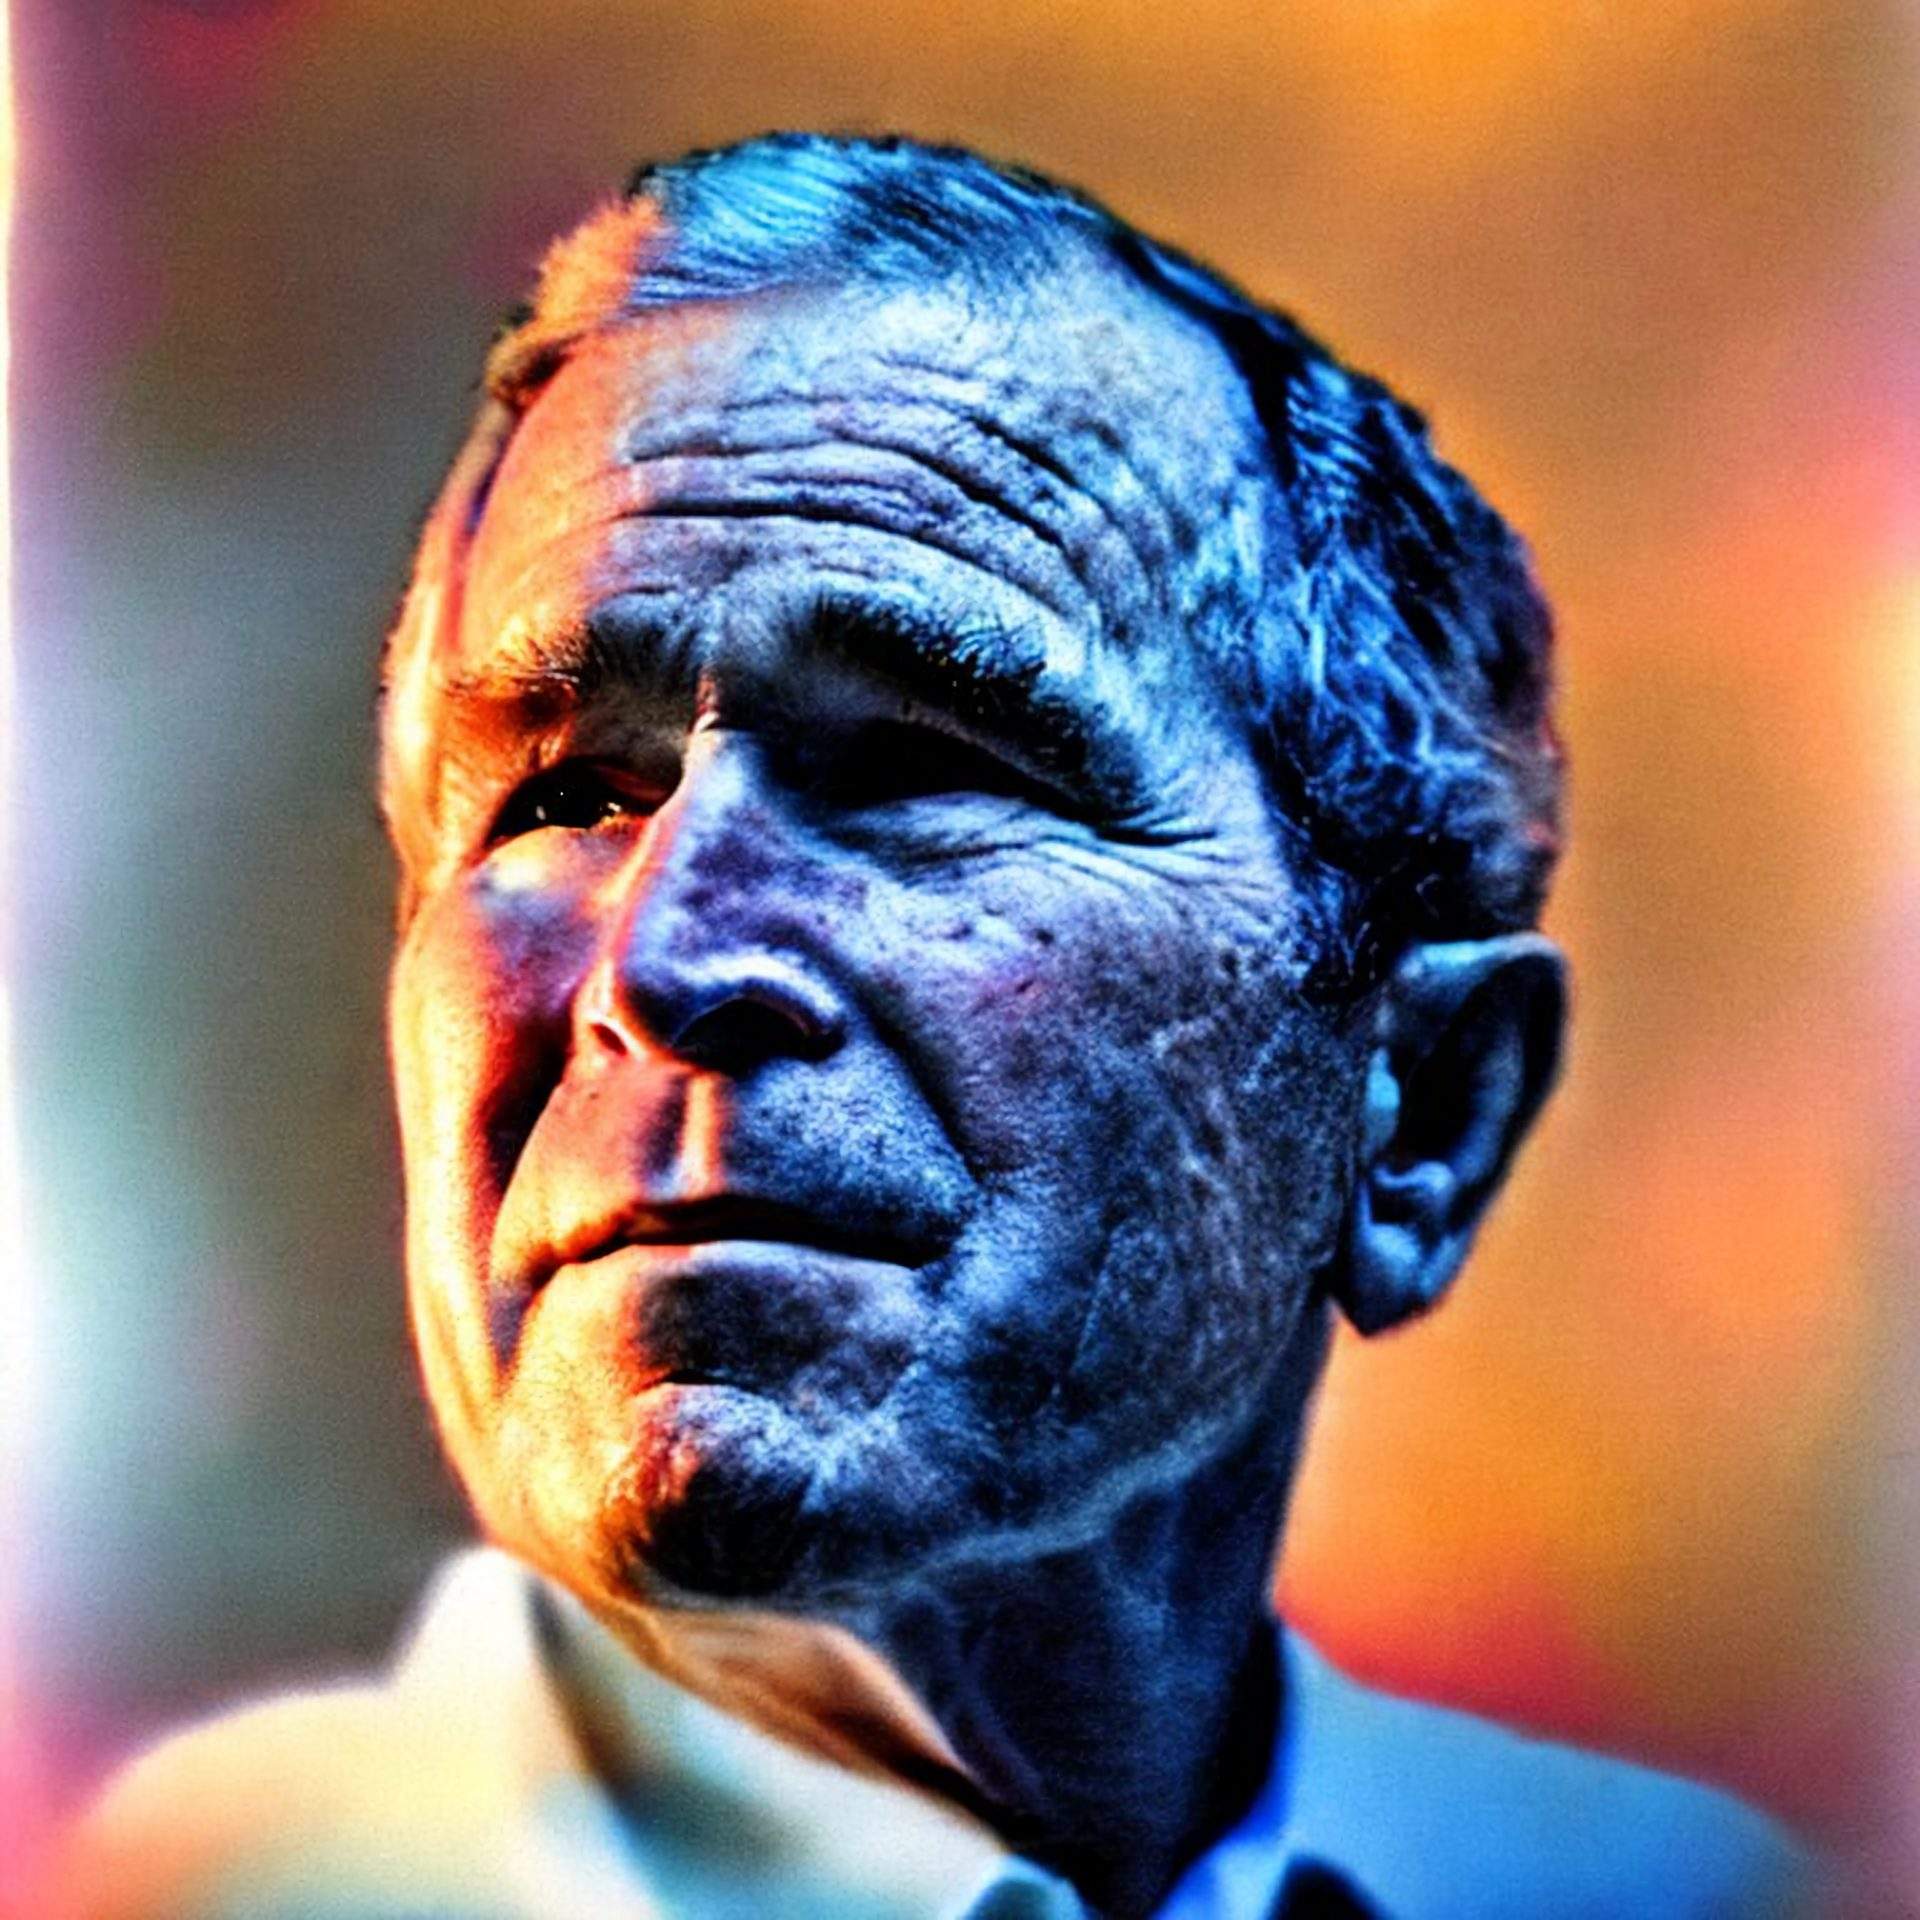 Iconic portrait of George W Bush